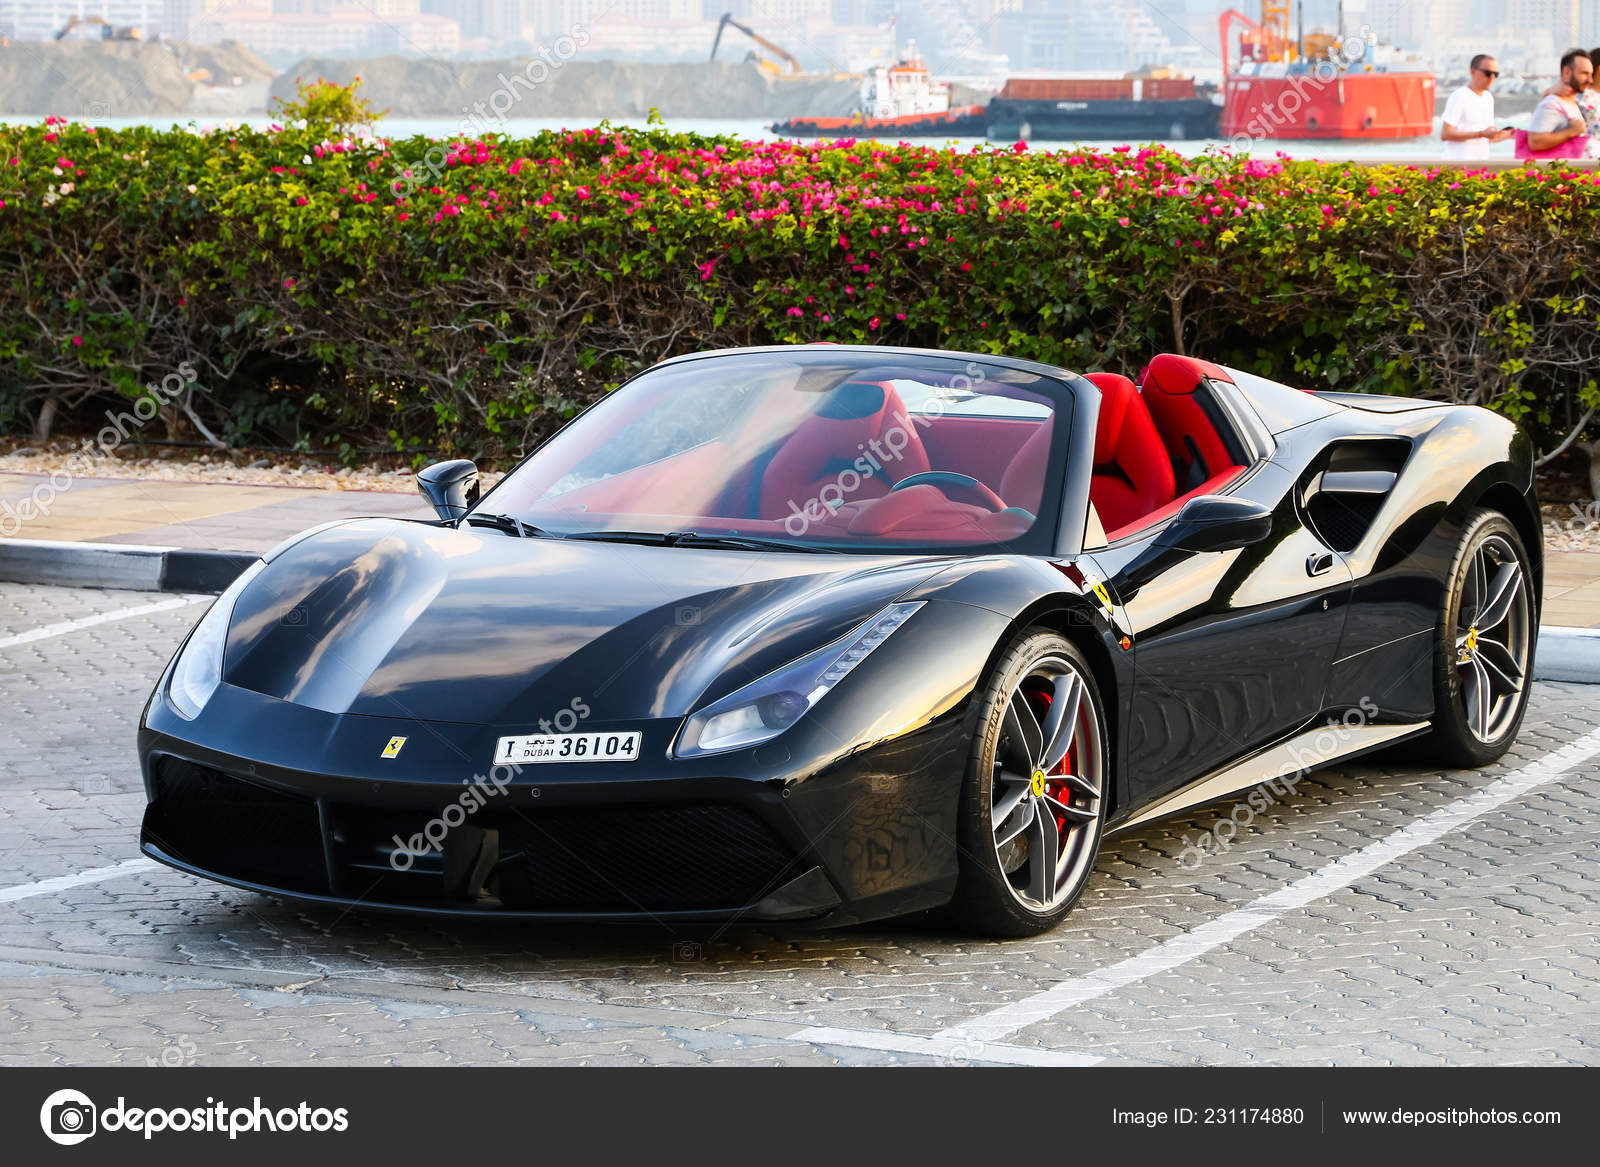 Dubai Uae November 2018 Luxury Sportscar Ferrari 488 Spider